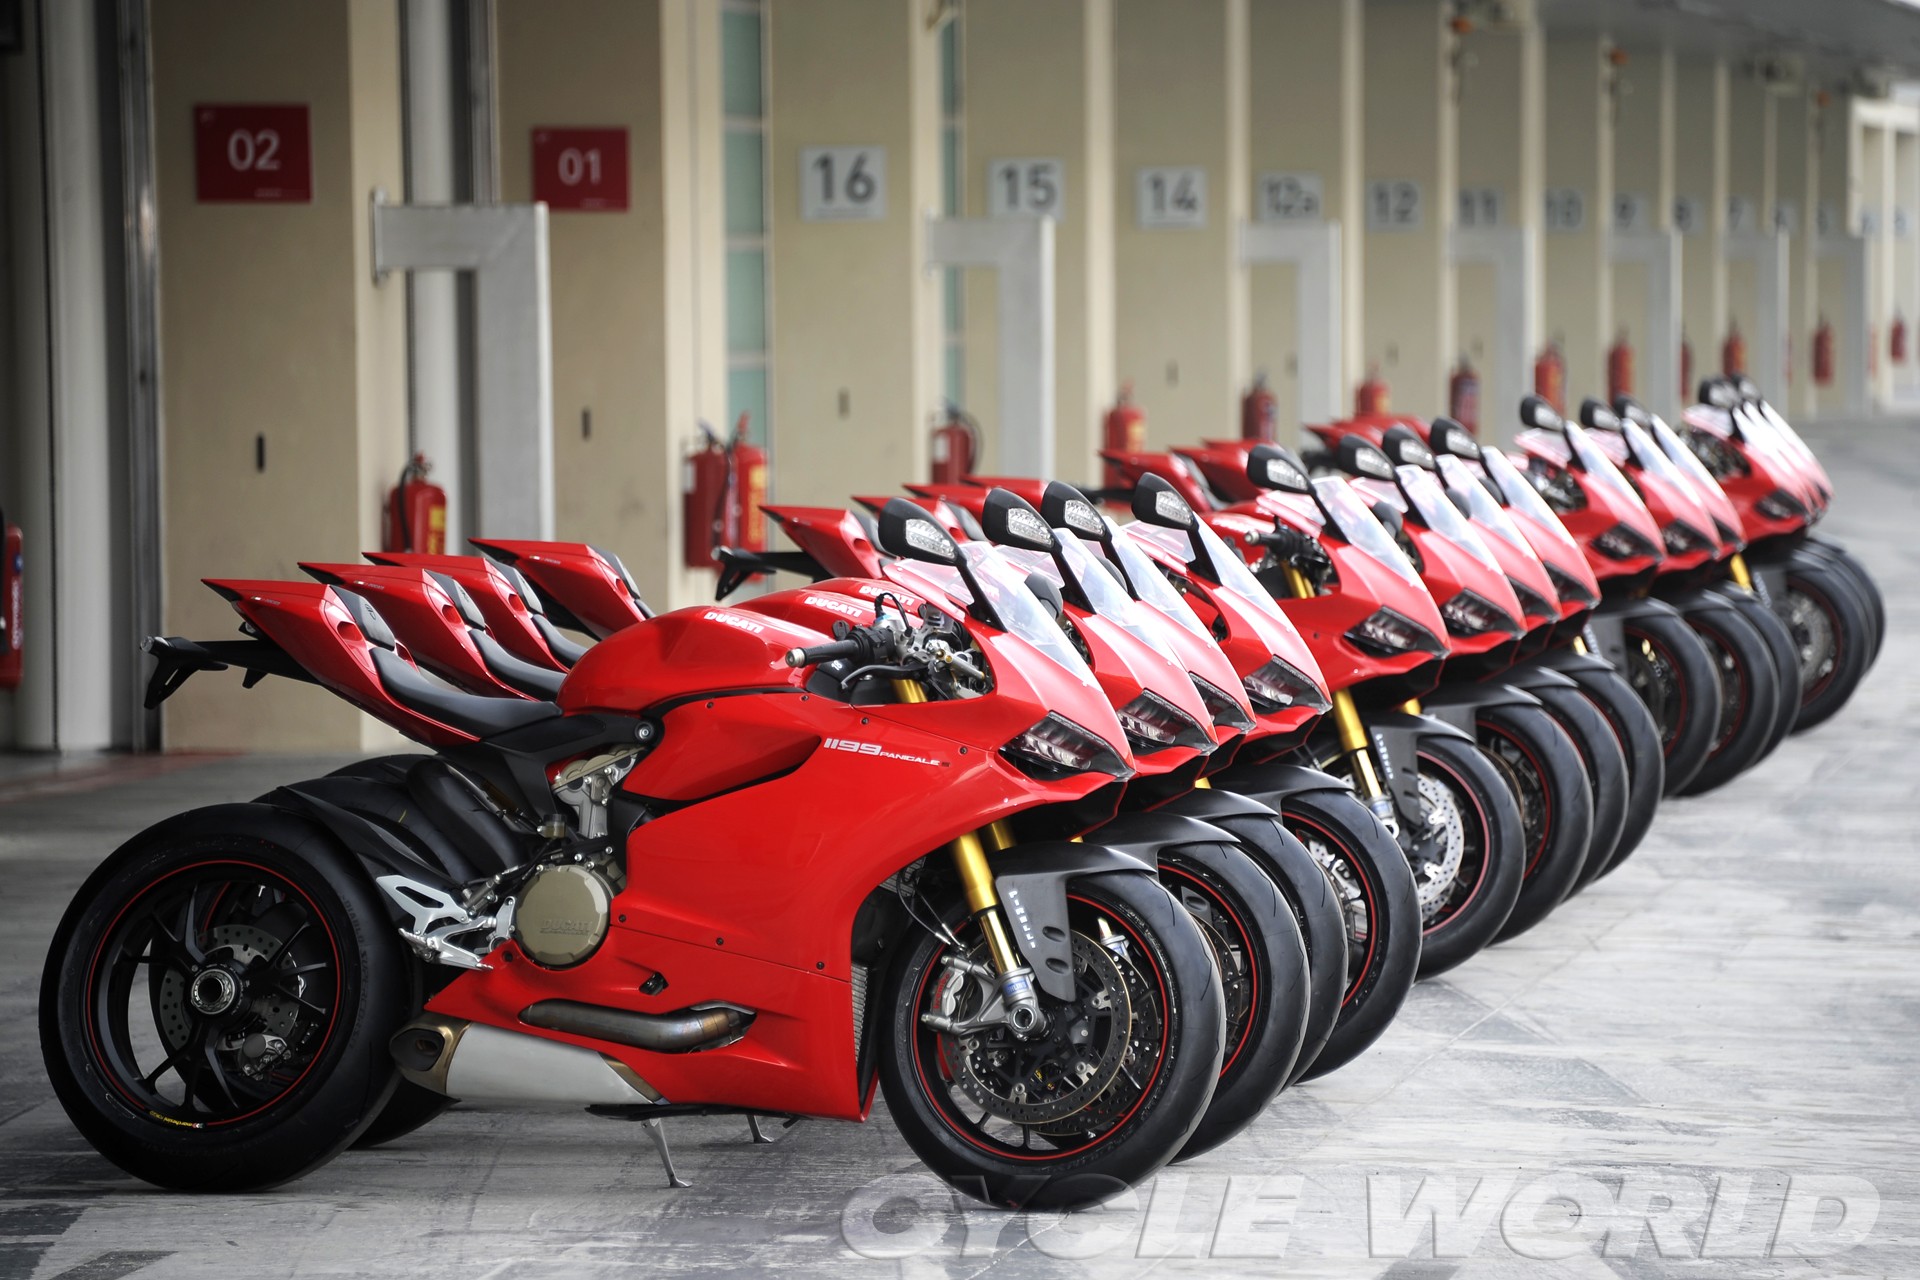 General 1920x1280 Ducati motorcycle vehicle Ducati 1199 Red Motorcycles Italian motorcycles Volkswagen Group